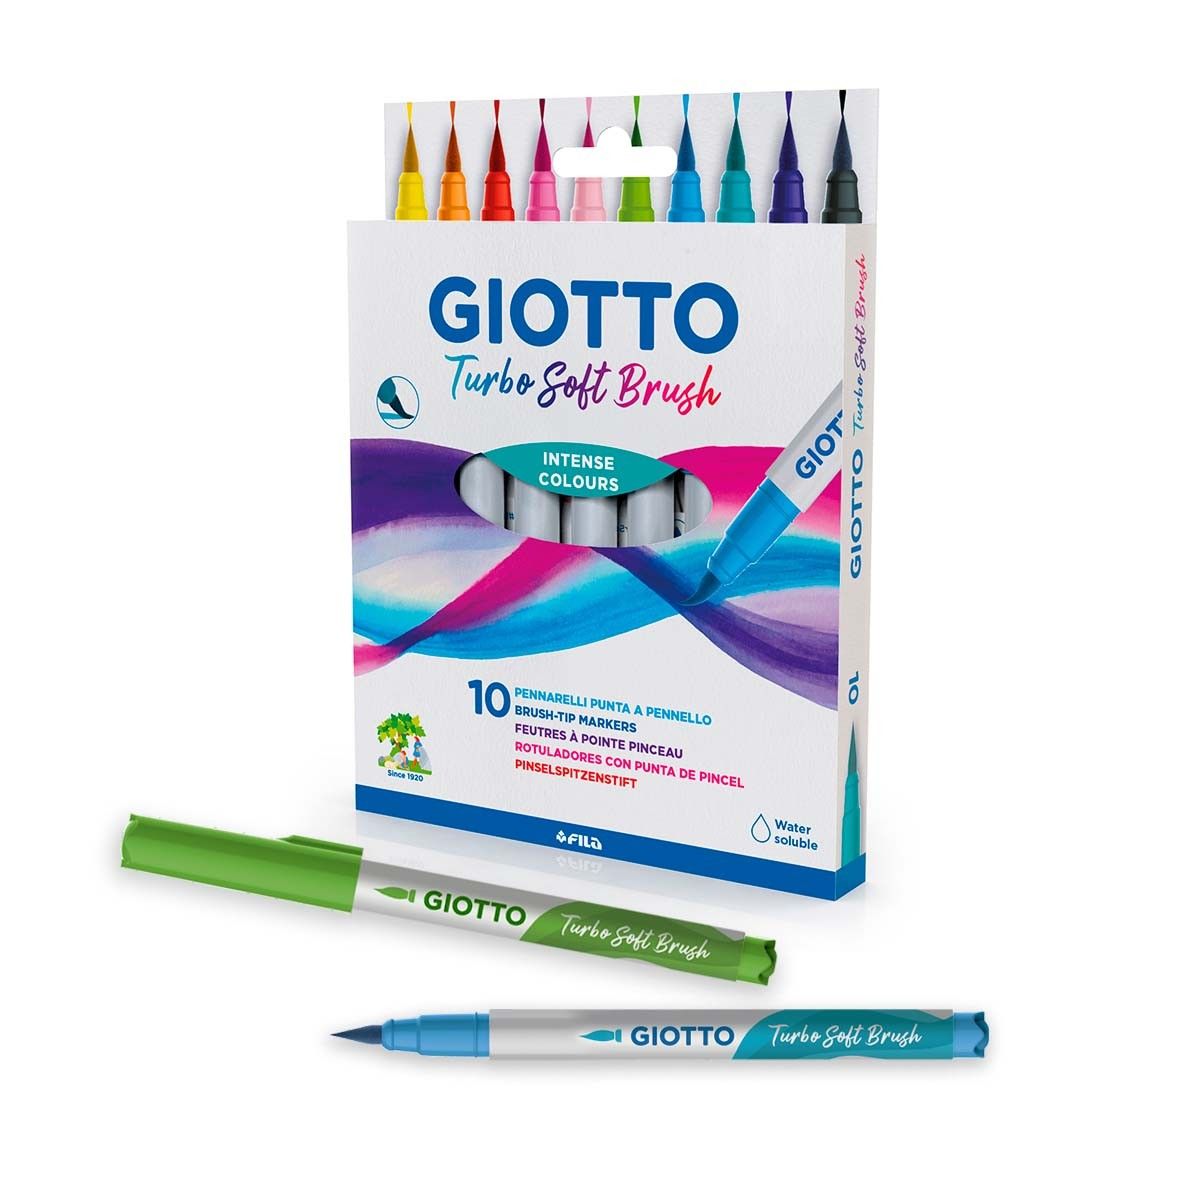 Giotto Turbo Soft Brush